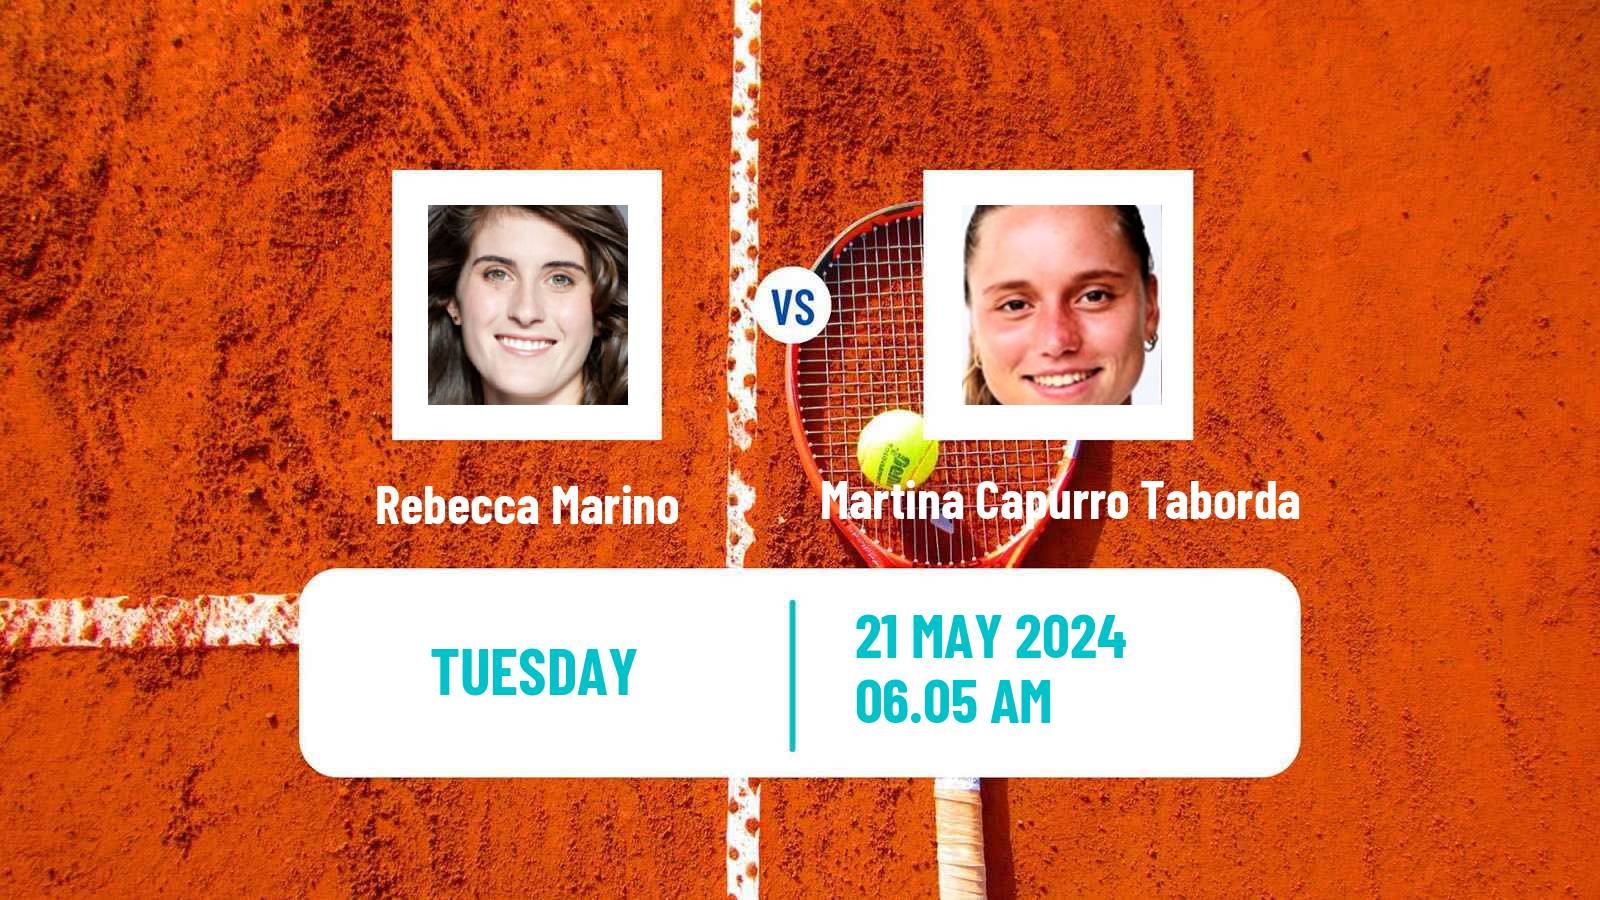 Tennis WTA Roland Garros Rebecca Marino - Martina Capurro Taborda